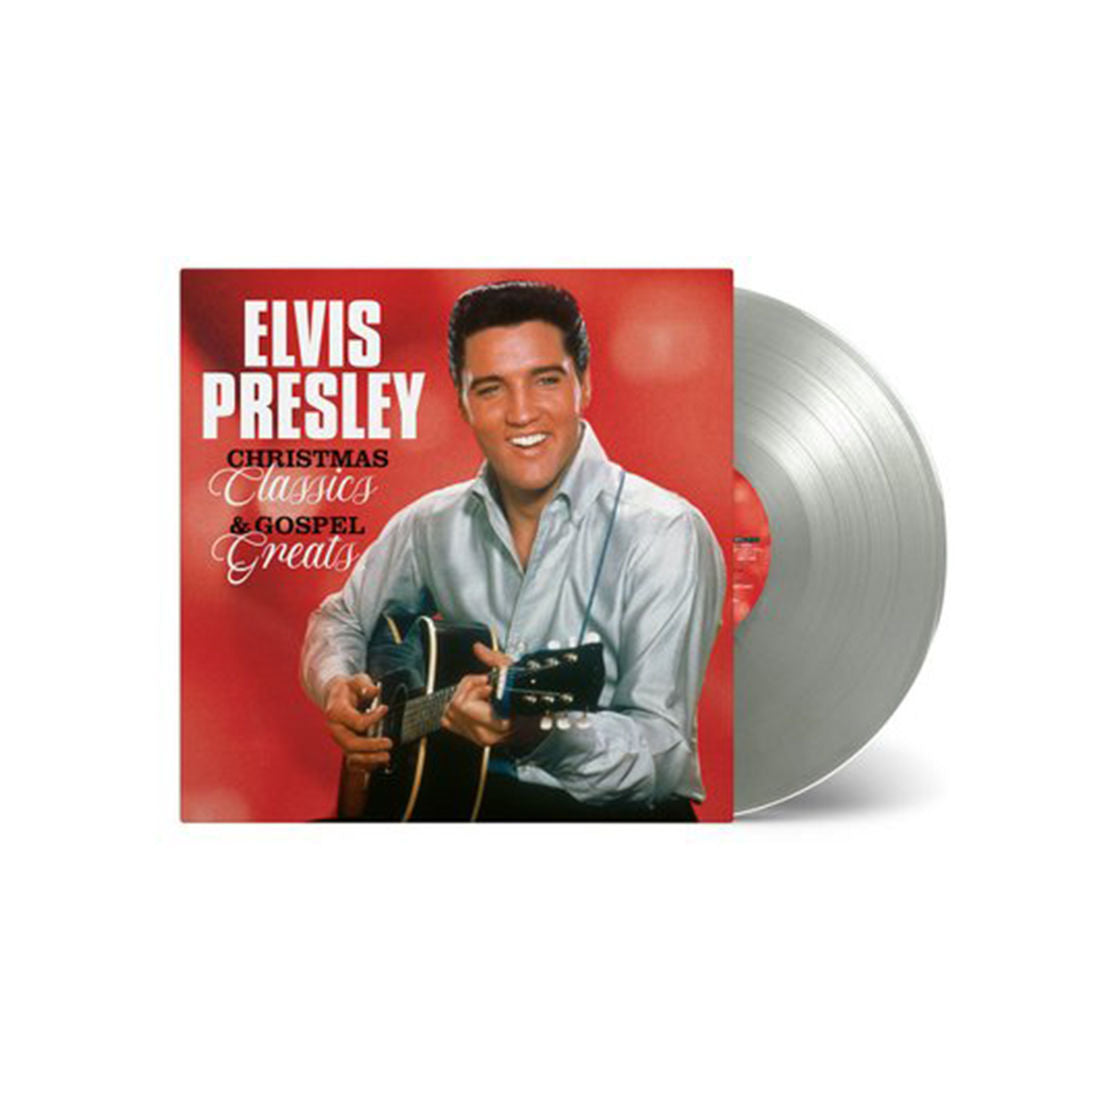 Elvis Presley - Christmas Classics and Gospel Greats: Limited Edition Silver Vinyl LP